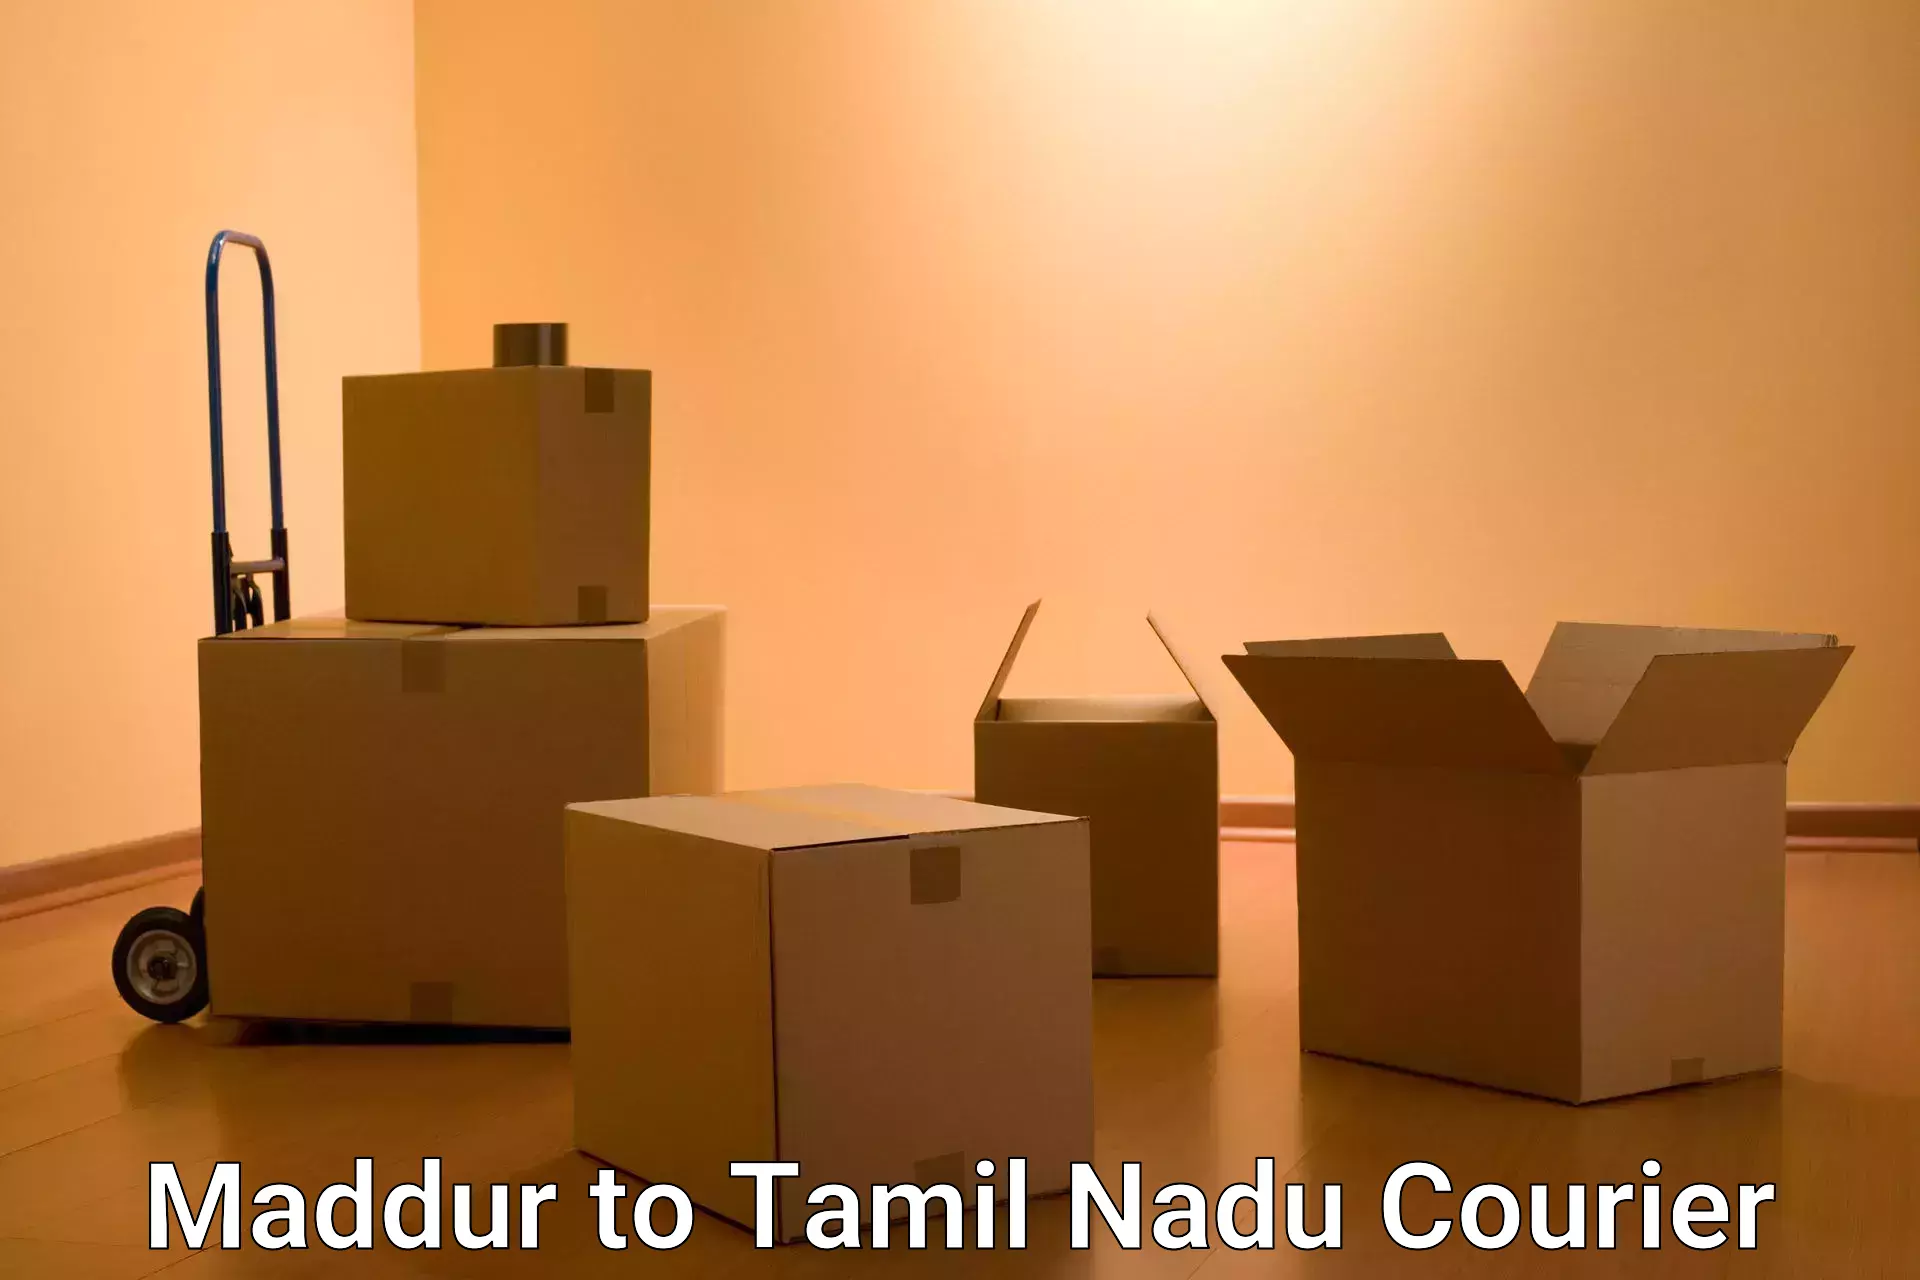 Enhanced delivery experience in Maddur to IIIT Tiruchirappalli